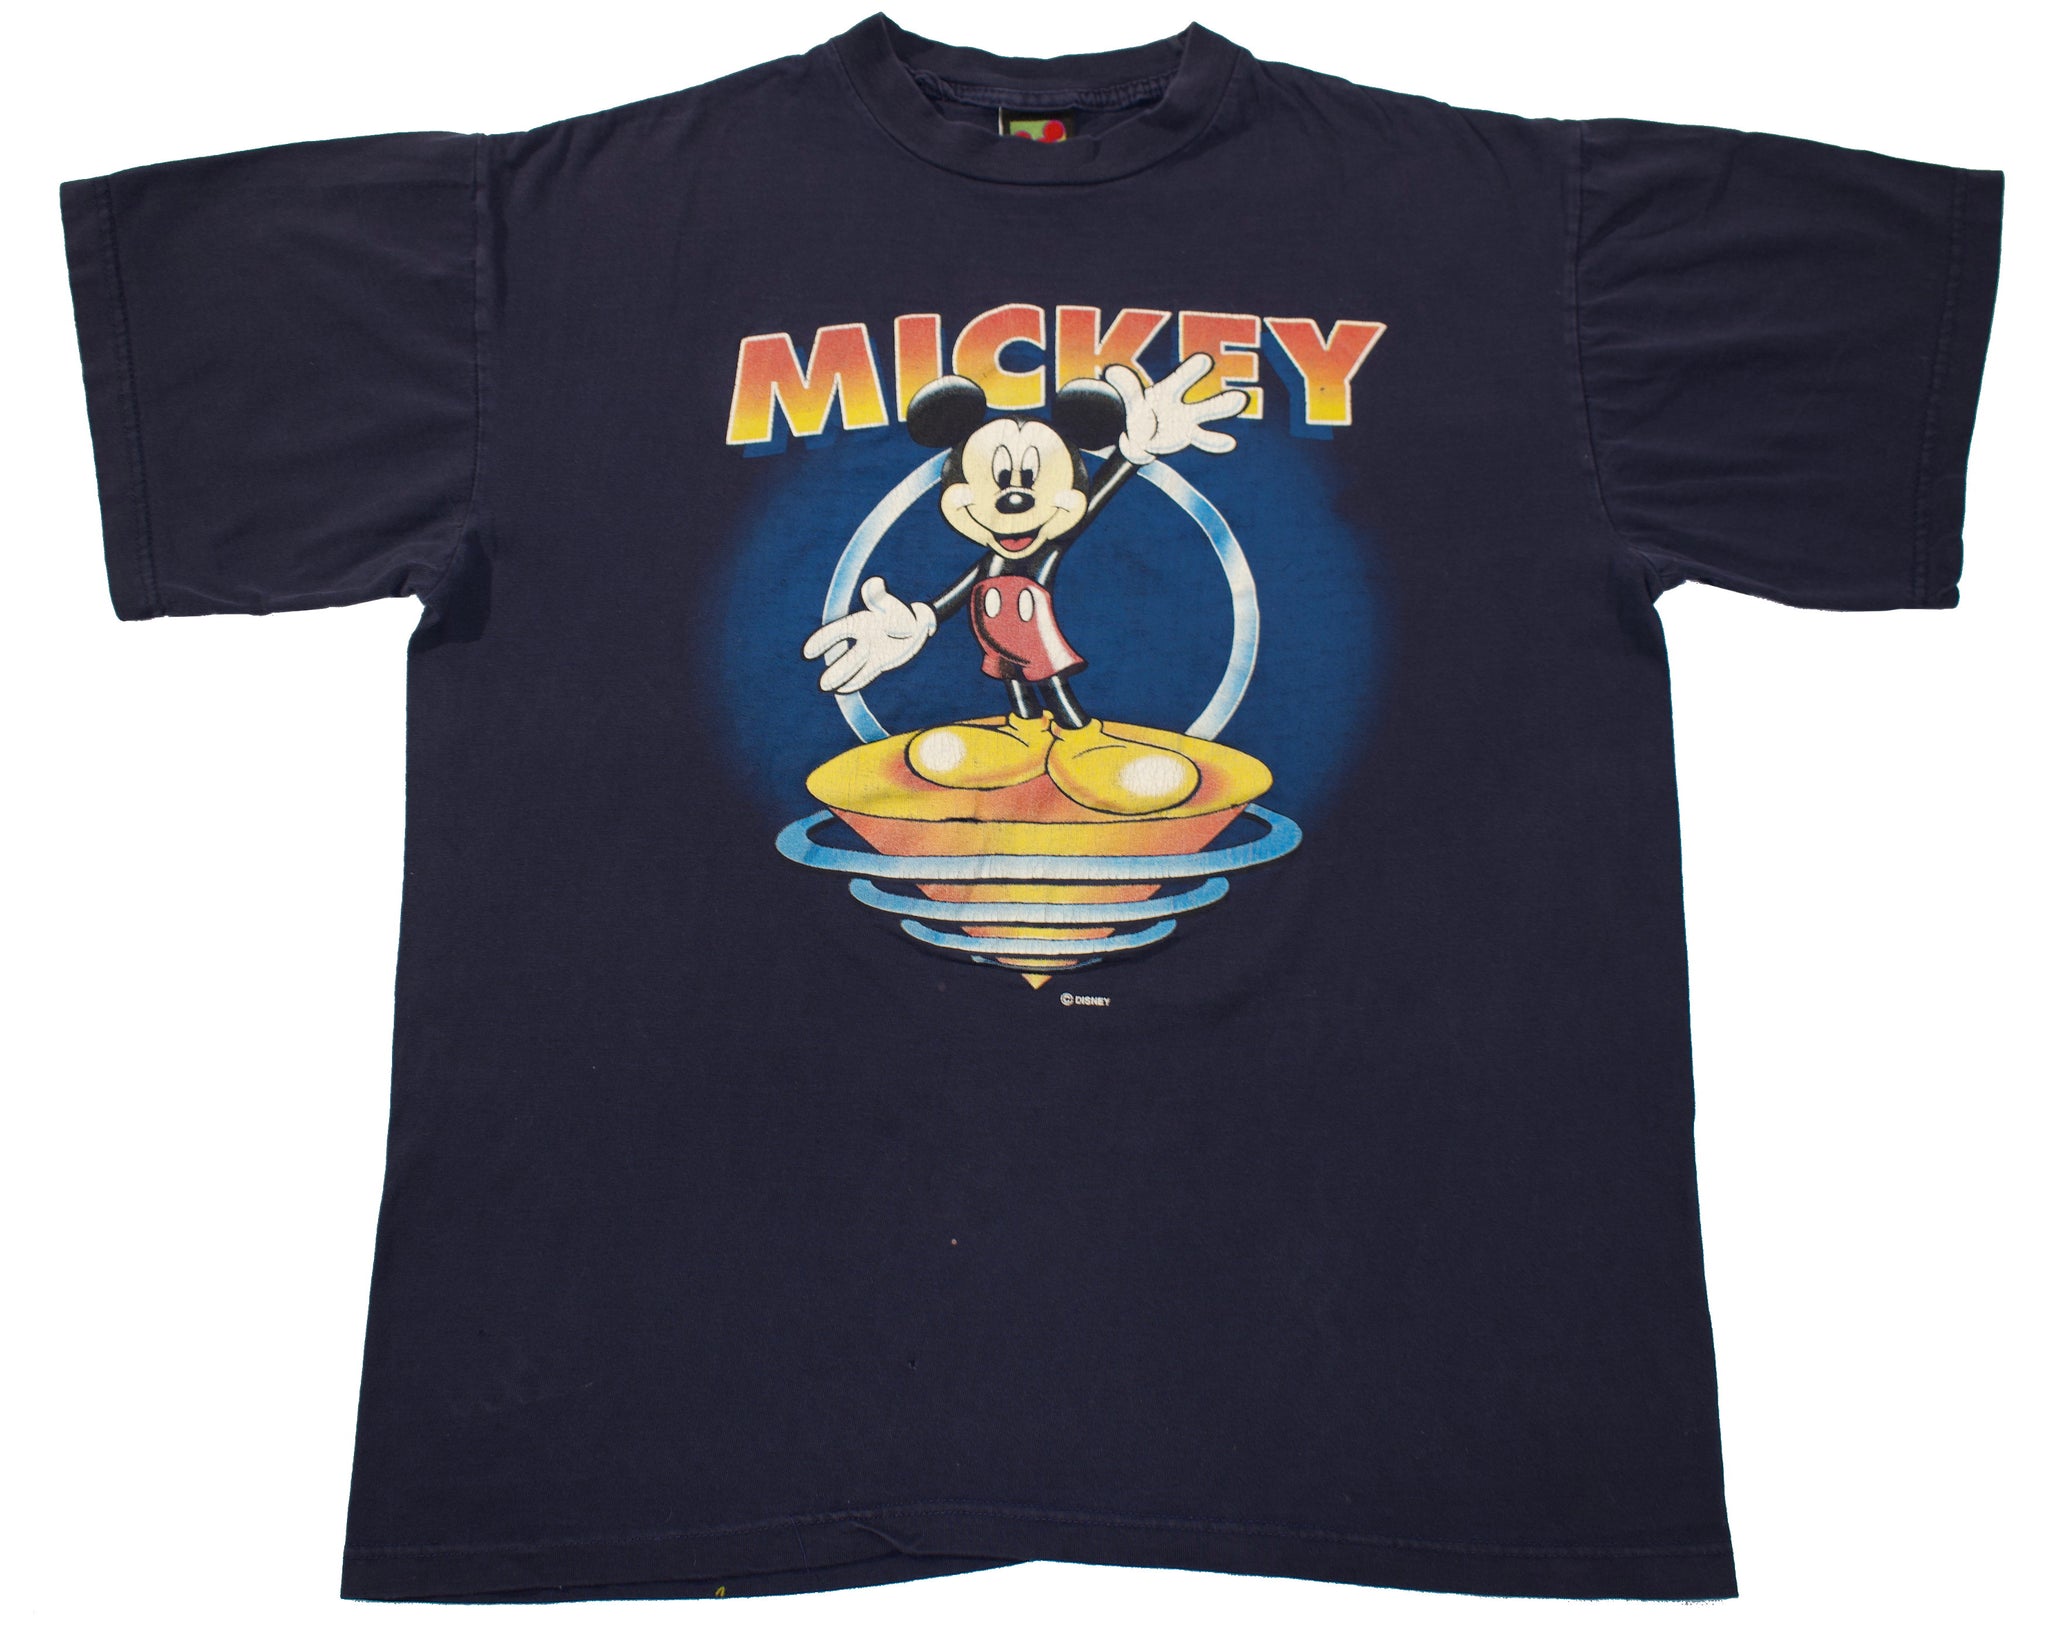 Vintage 90s Disney Mickey Mouse Shirt | Beyond 94